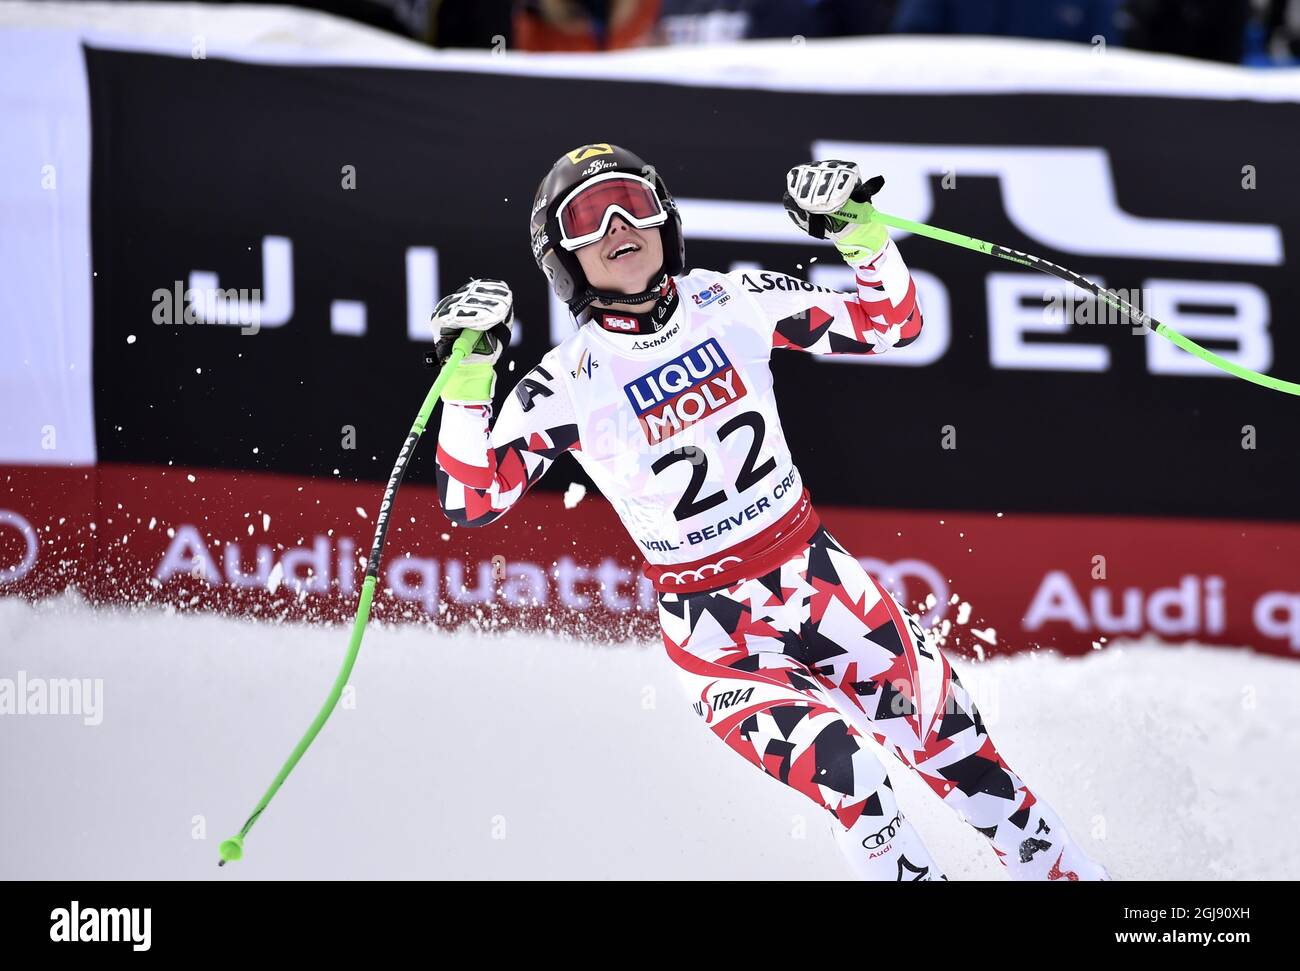 BEAVER CREEK 2015-02-03 Anna Fenninger of Austria is seen during the 2015 World Alpine Ski Championships women's Super G February 3, 2015 in Beaver Creek, Colorado, USA. Foto: Pontus Lundahl / TT / kod 10050  Stock Photo